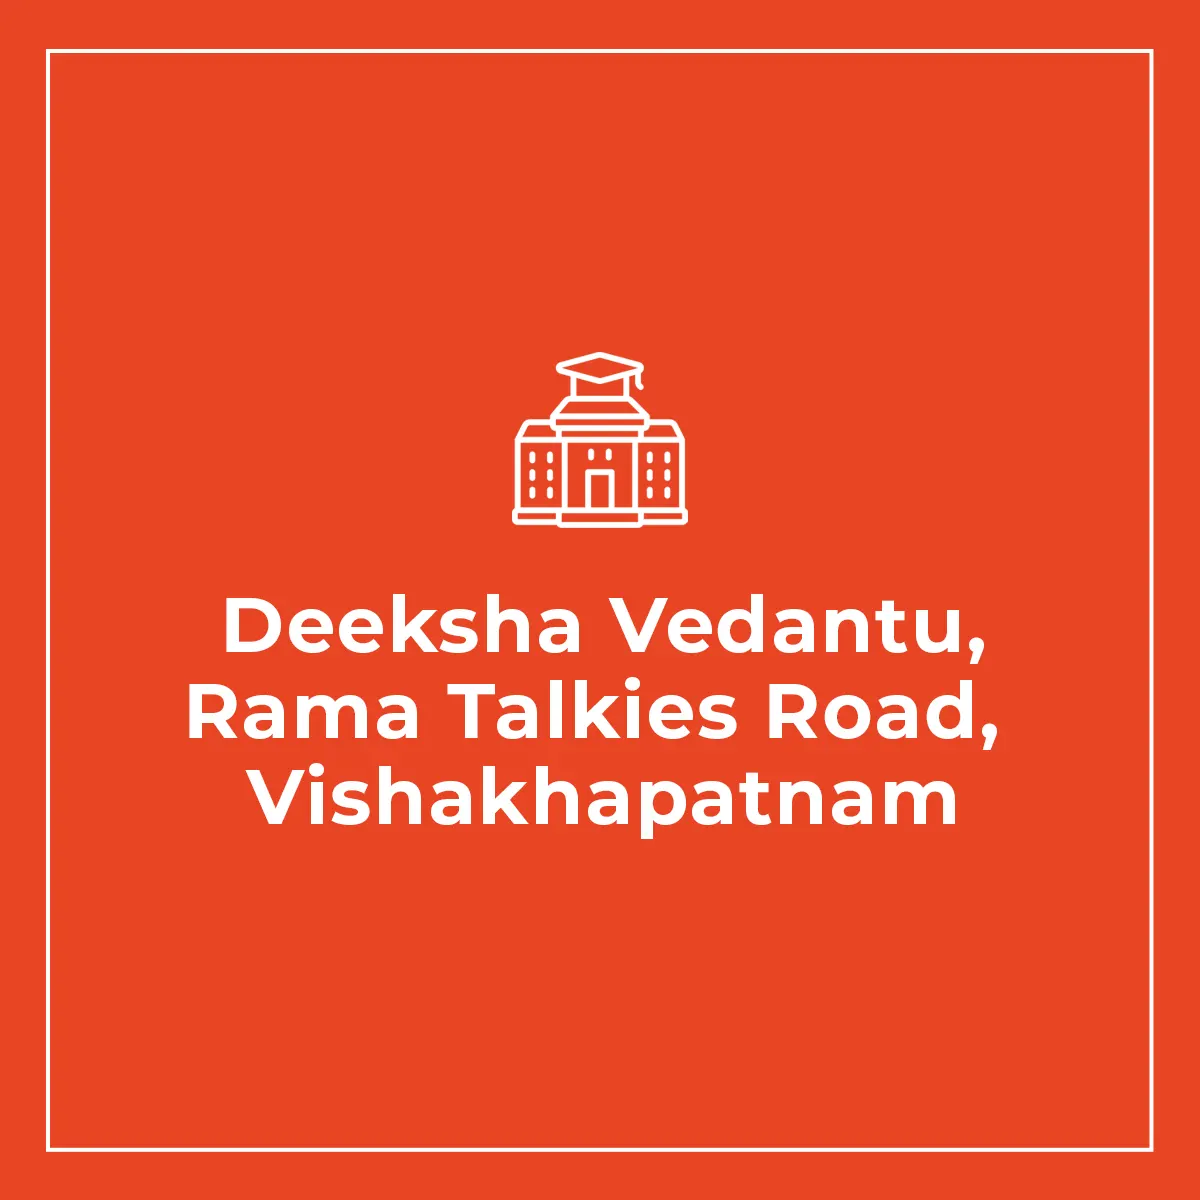 Deeksha Vedantu, Rama Talkies Road, Vishakhapatnam